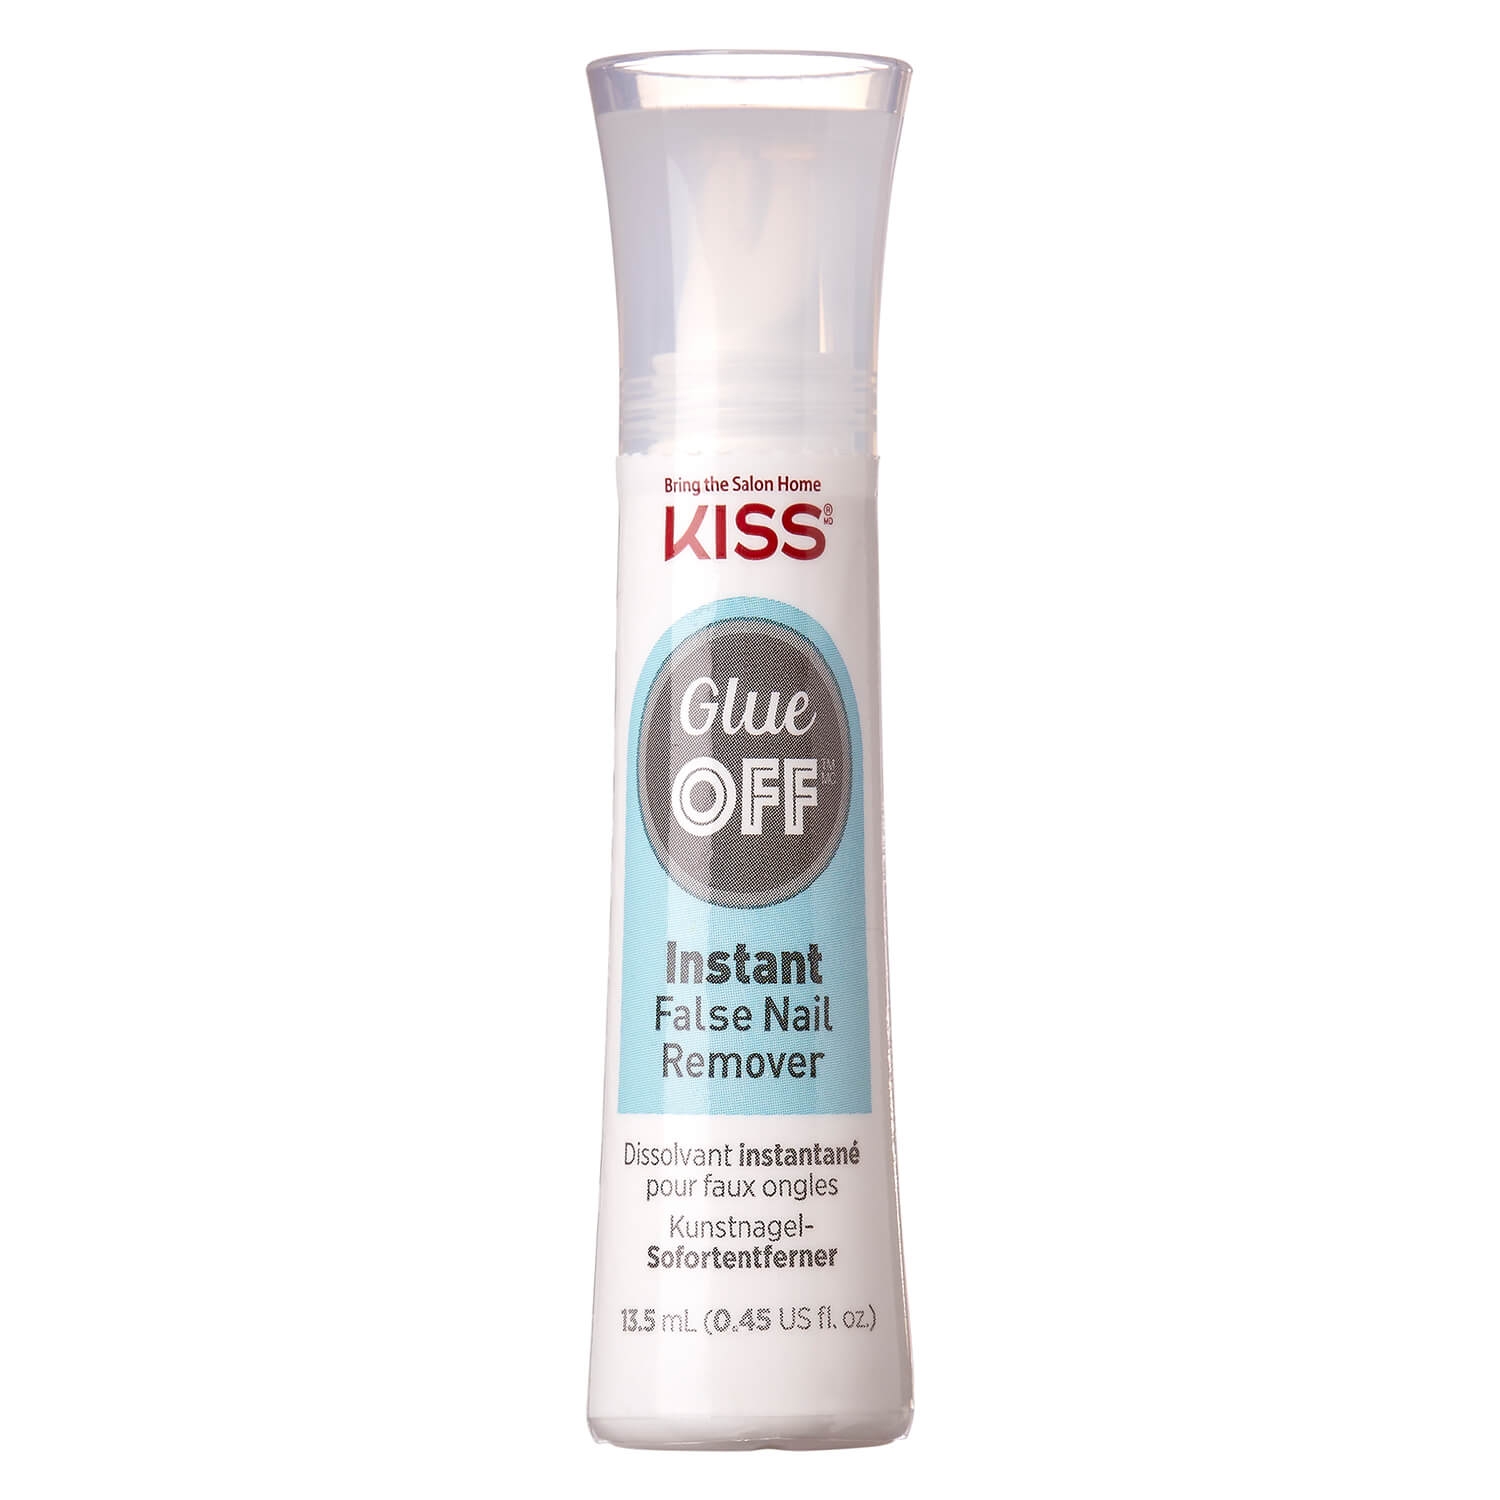 Produktbild von KISS Nails - Glue OFF Instant False Nail Remover